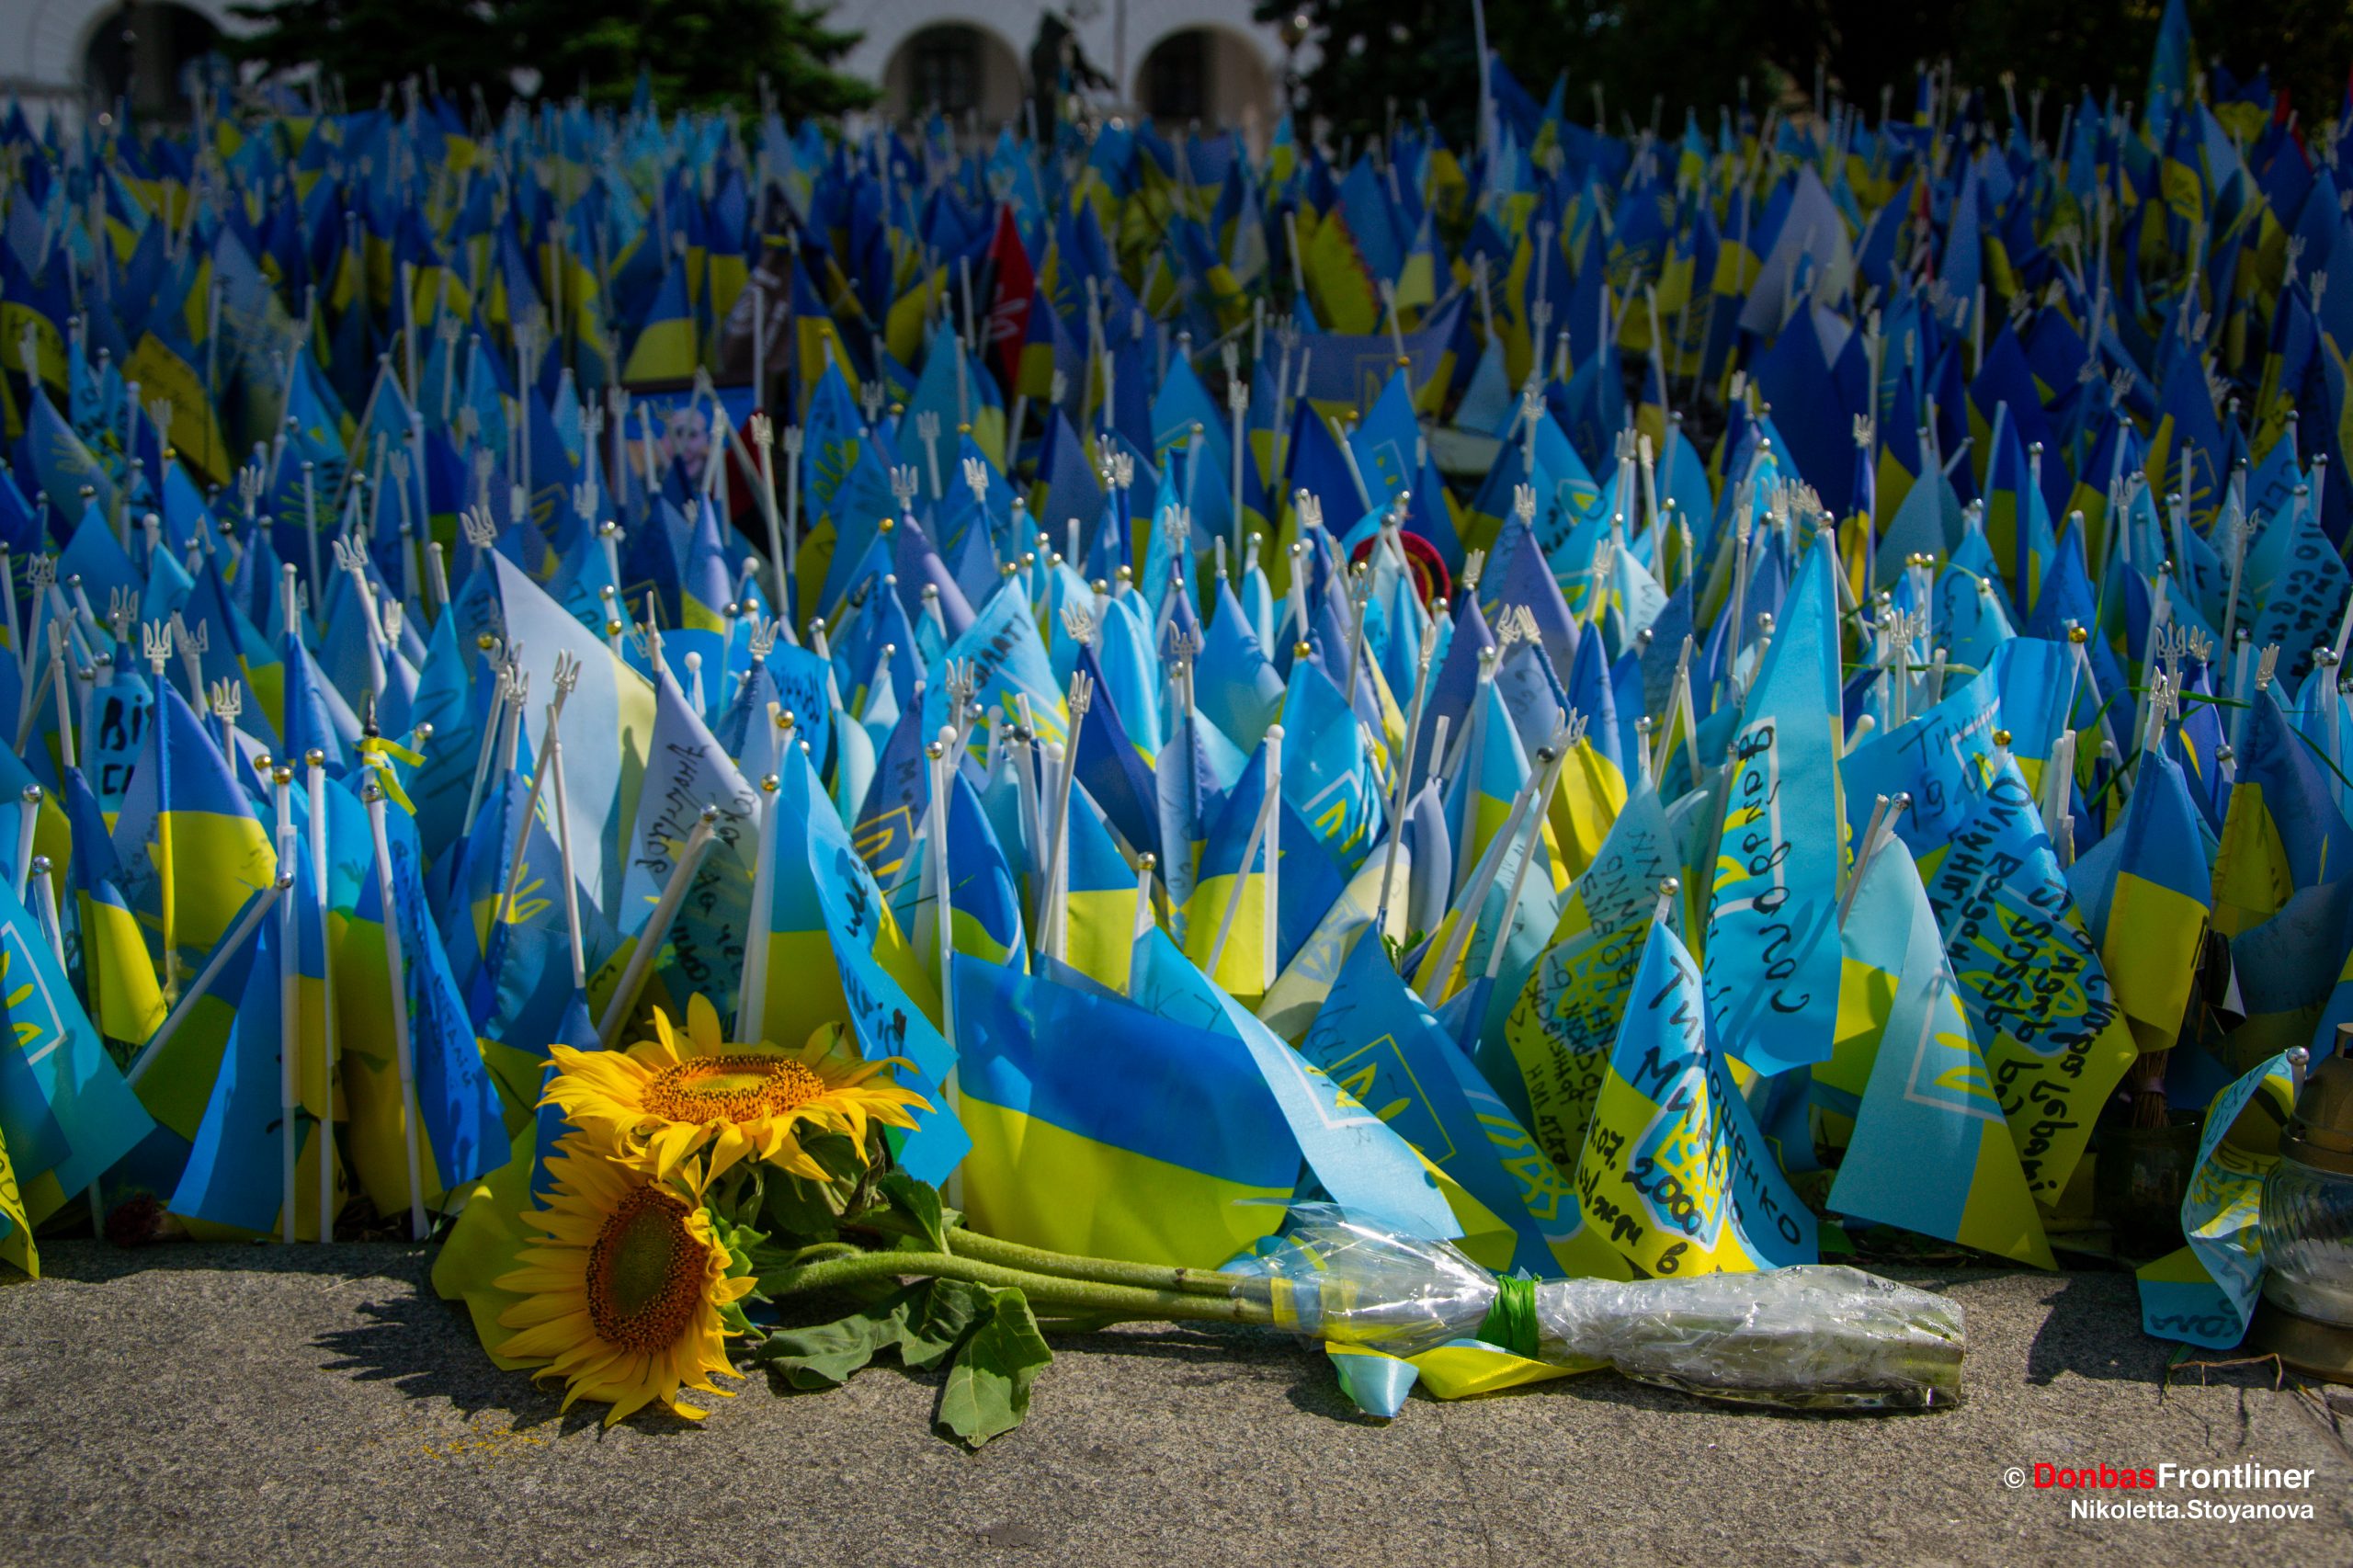 Donbas Frontliner / Прапорці з іменами загиблих героїв.